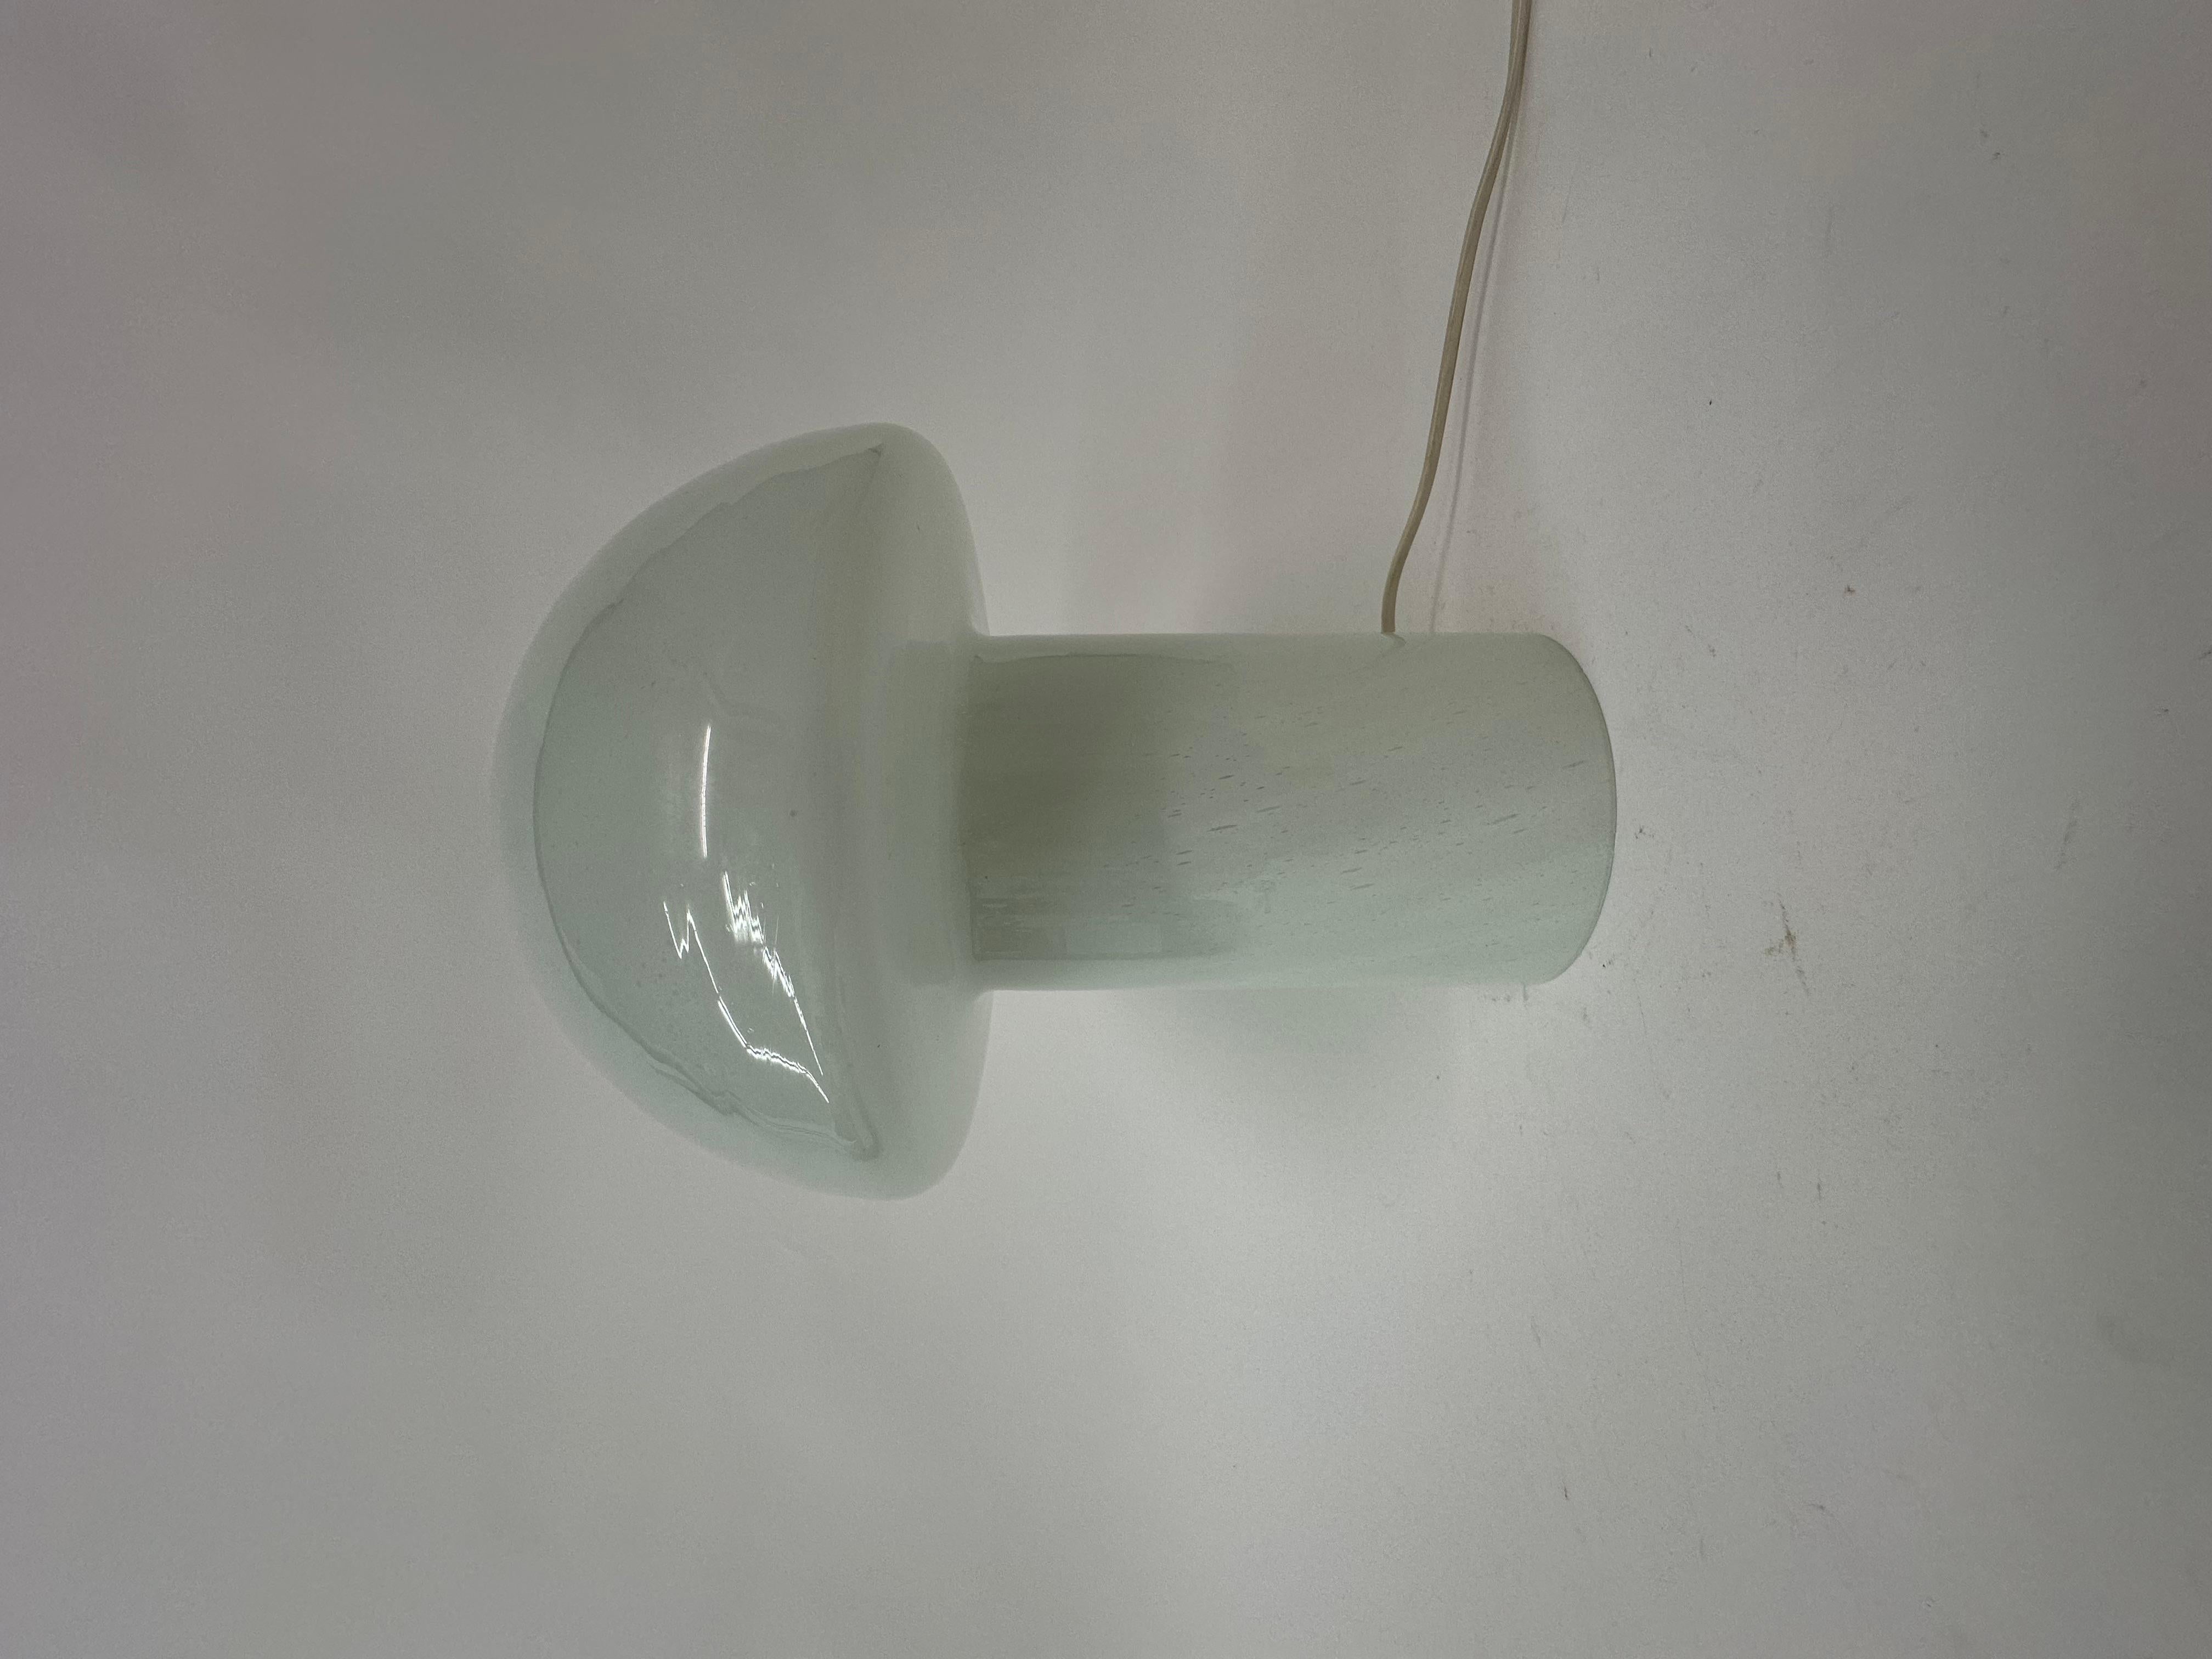 Mid-century design mushroom glass table lamp , 1970’s

Dimensions: 33cm H, 24cm Diameter
Material: Glass
Color: White